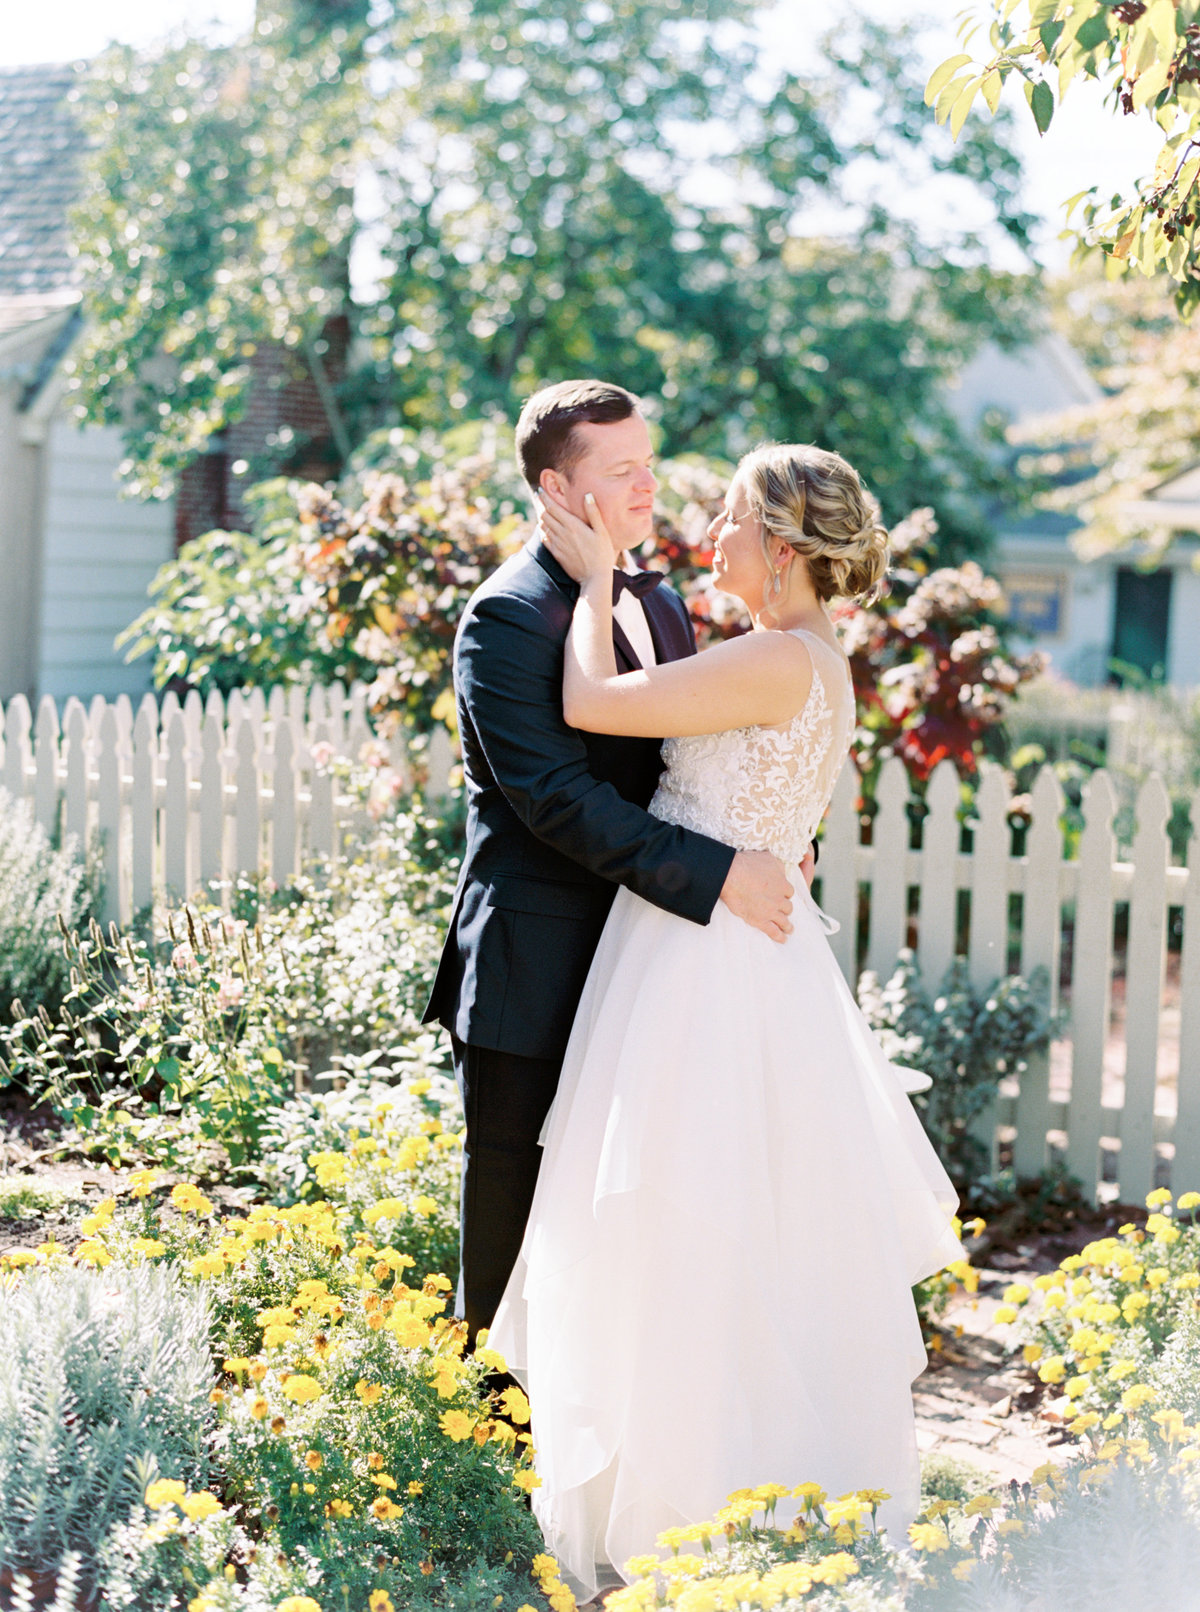 Easton_Maryland-fall-backyard-wedding-photographer-Richmond-natalie-jayne-photography-image-08